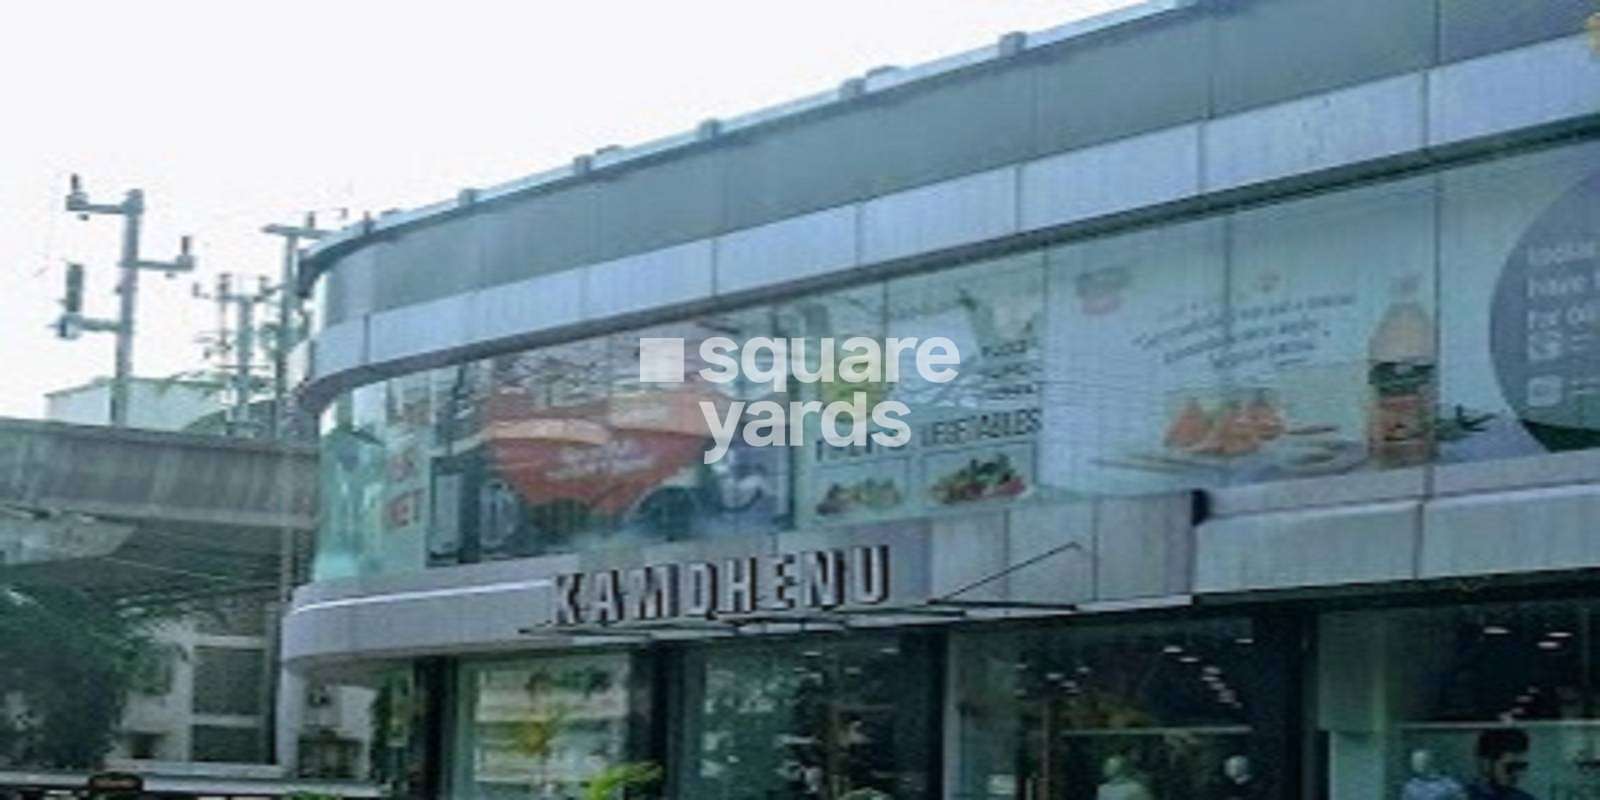 Kamdhenu Shopping Centre Cover Image